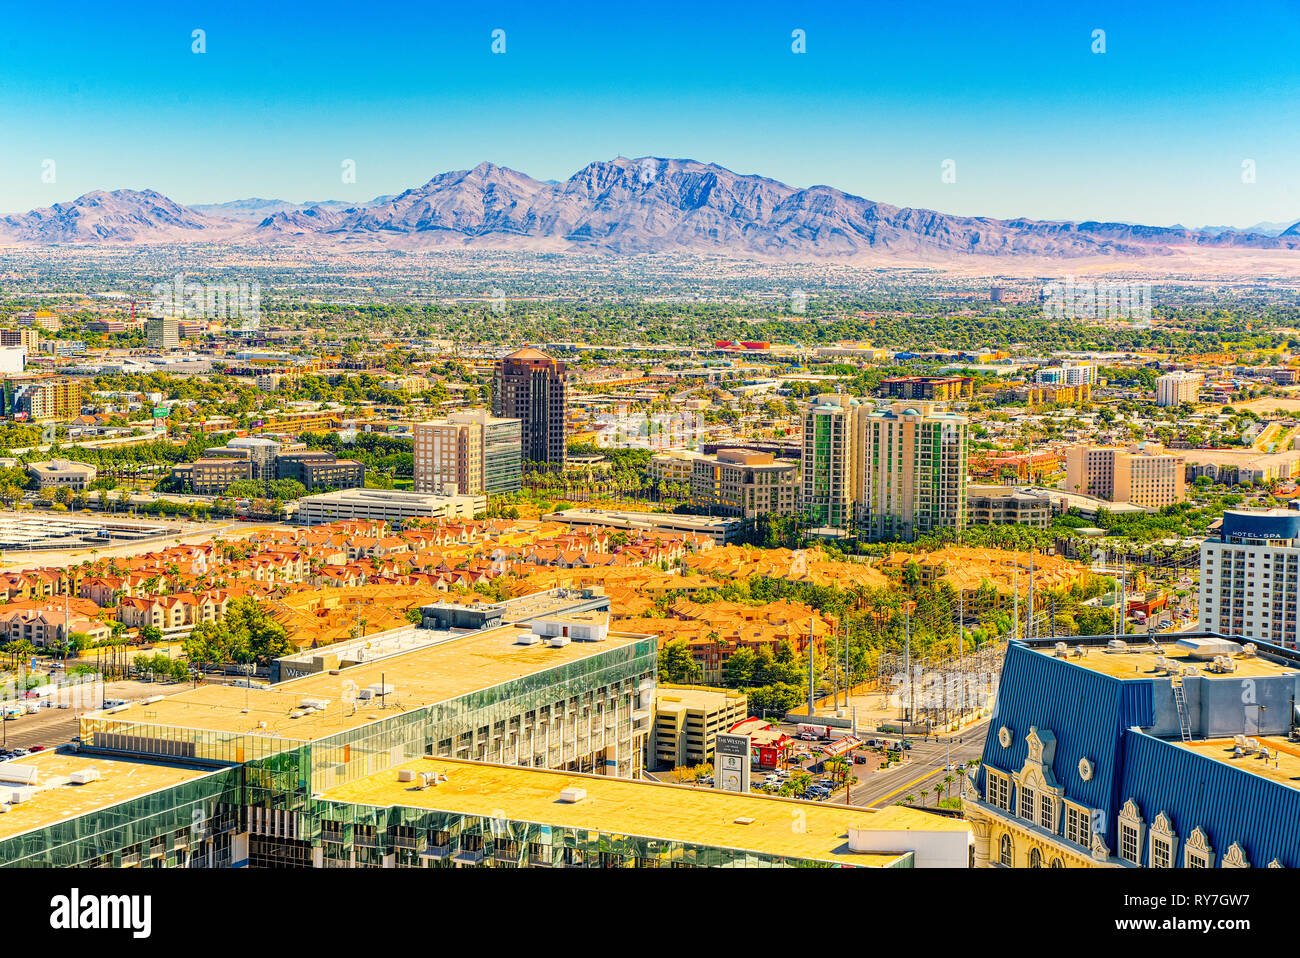 Las Vegas, Nevada, USA - September 17, 2018: Main street of Las Vegas is the Strip. View from above. Stock Photo